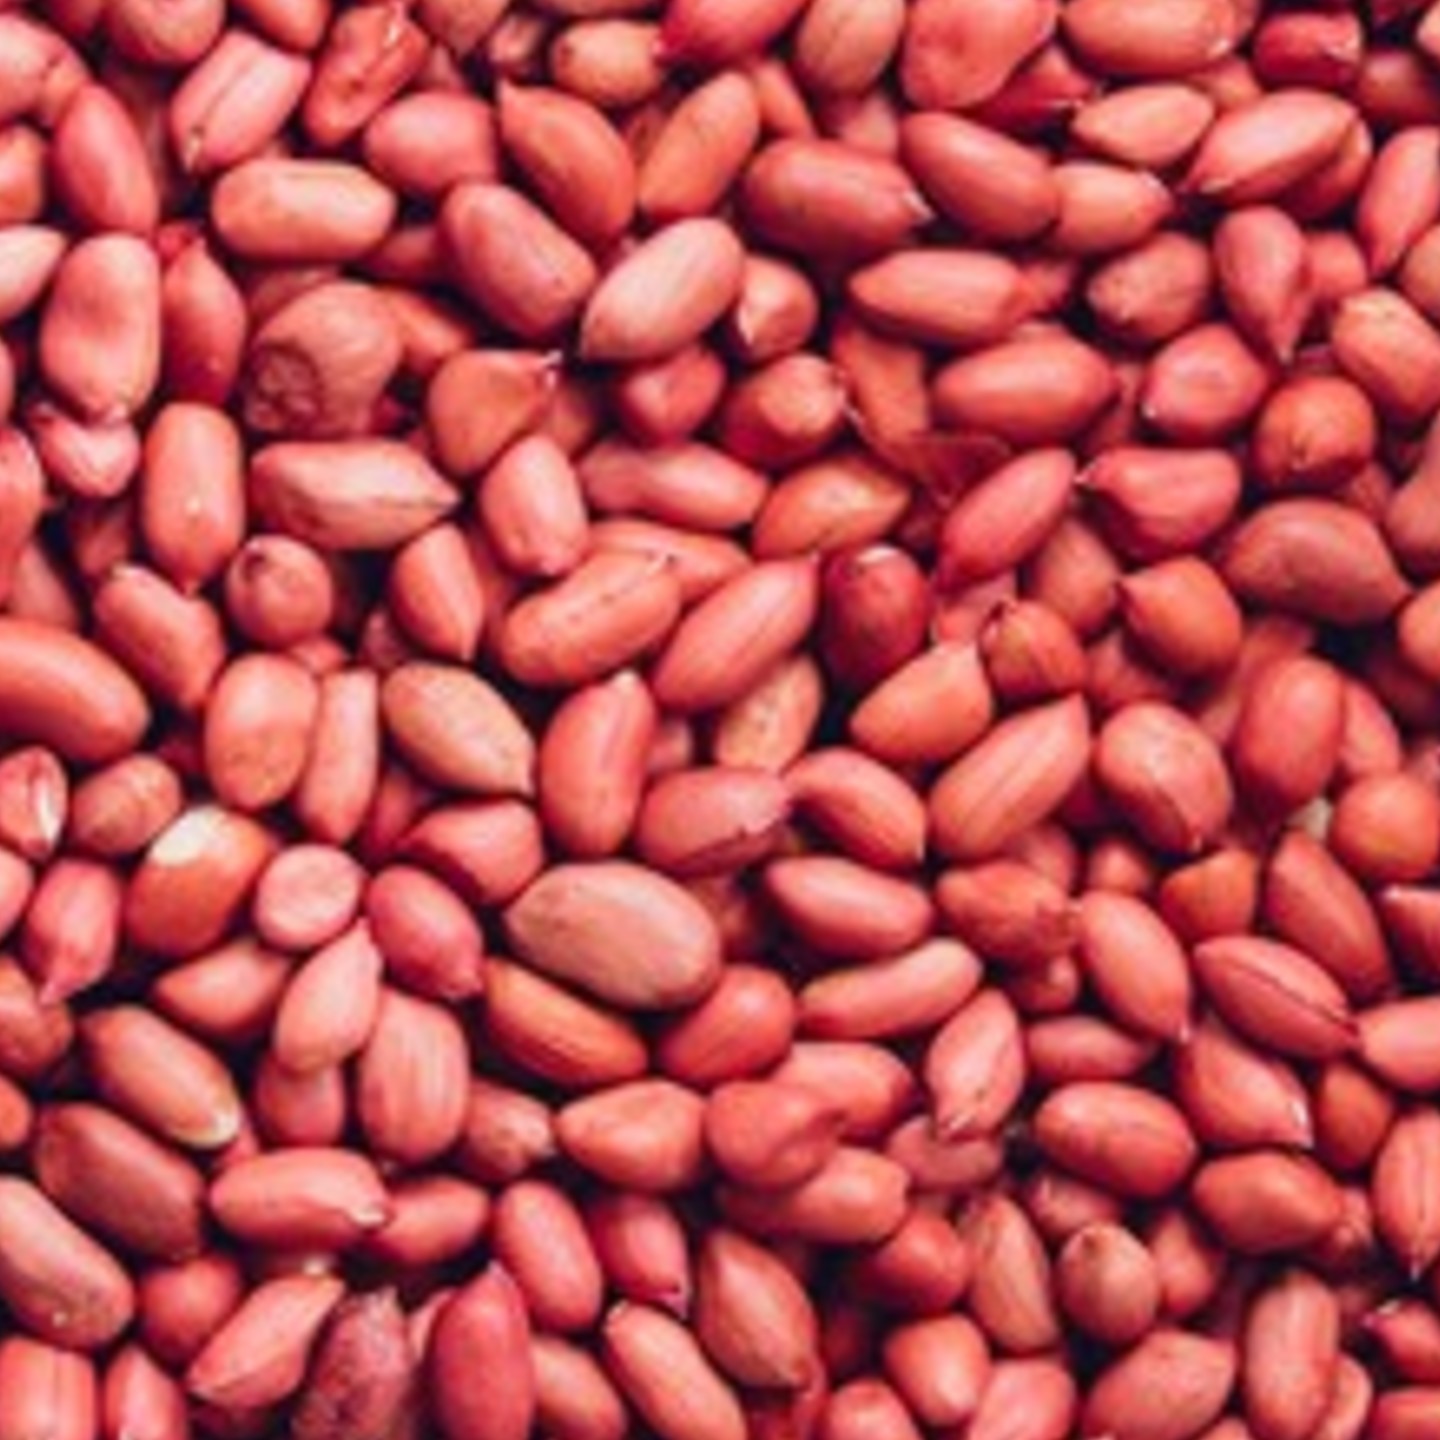 Qualitywala Raw Peanuts Red, 500g